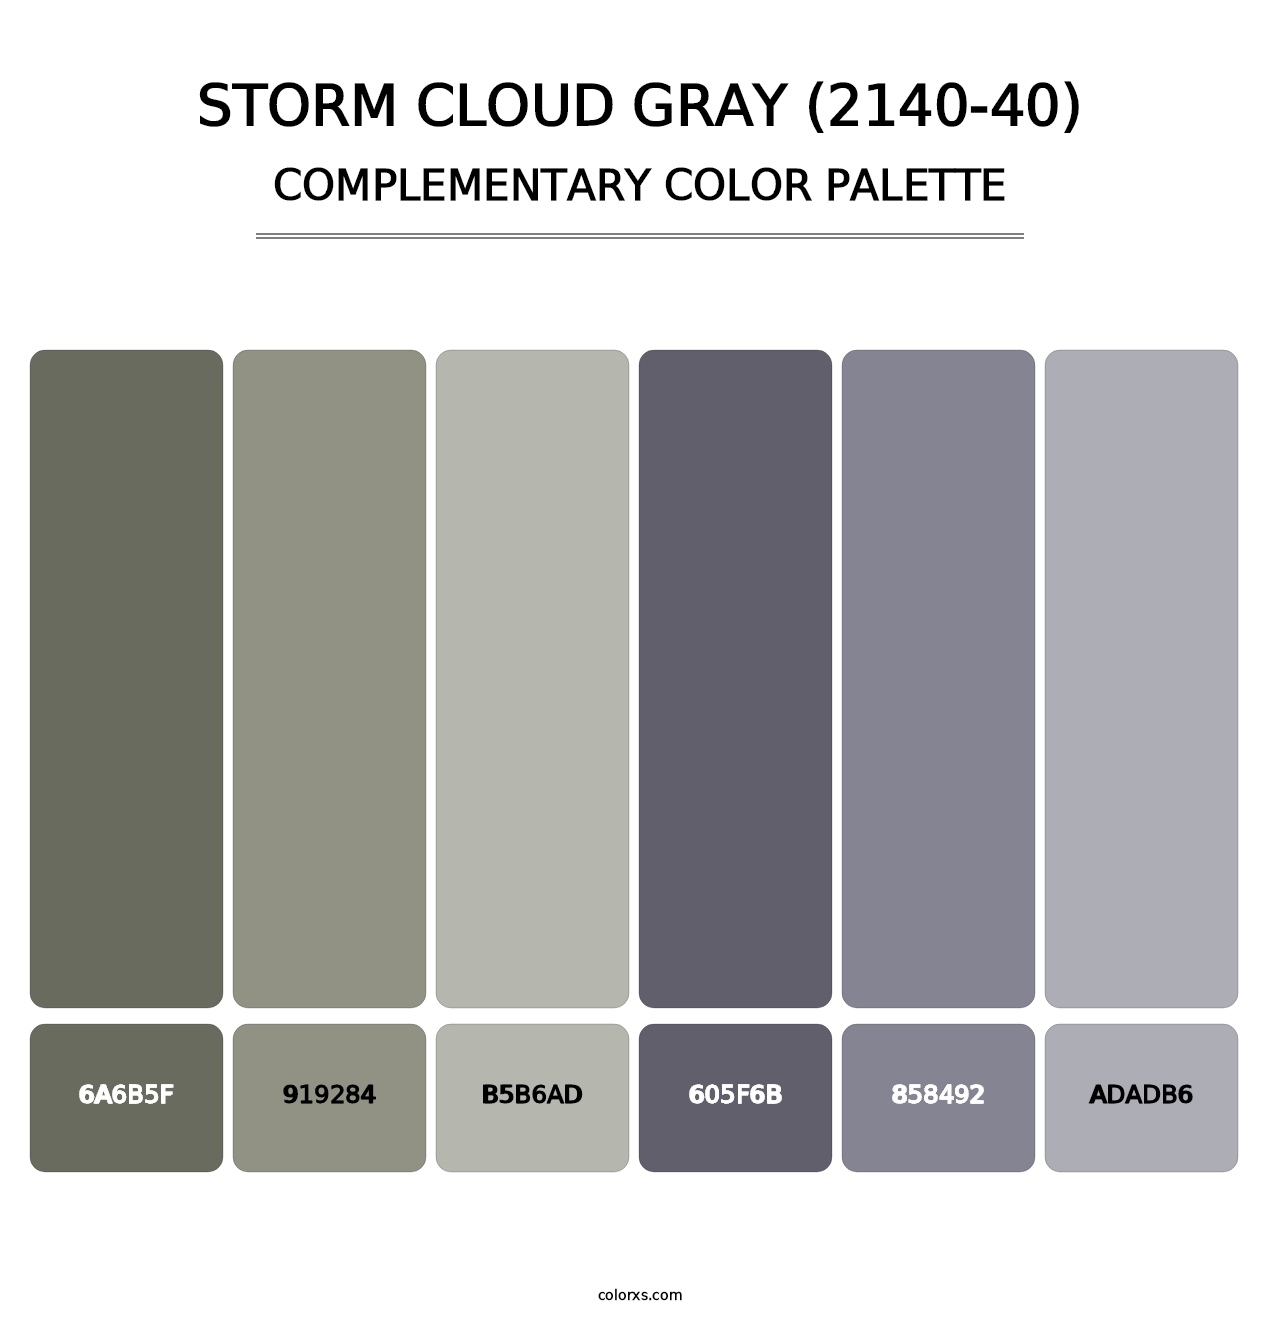 Storm Cloud Gray (2140-40) - Complementary Color Palette